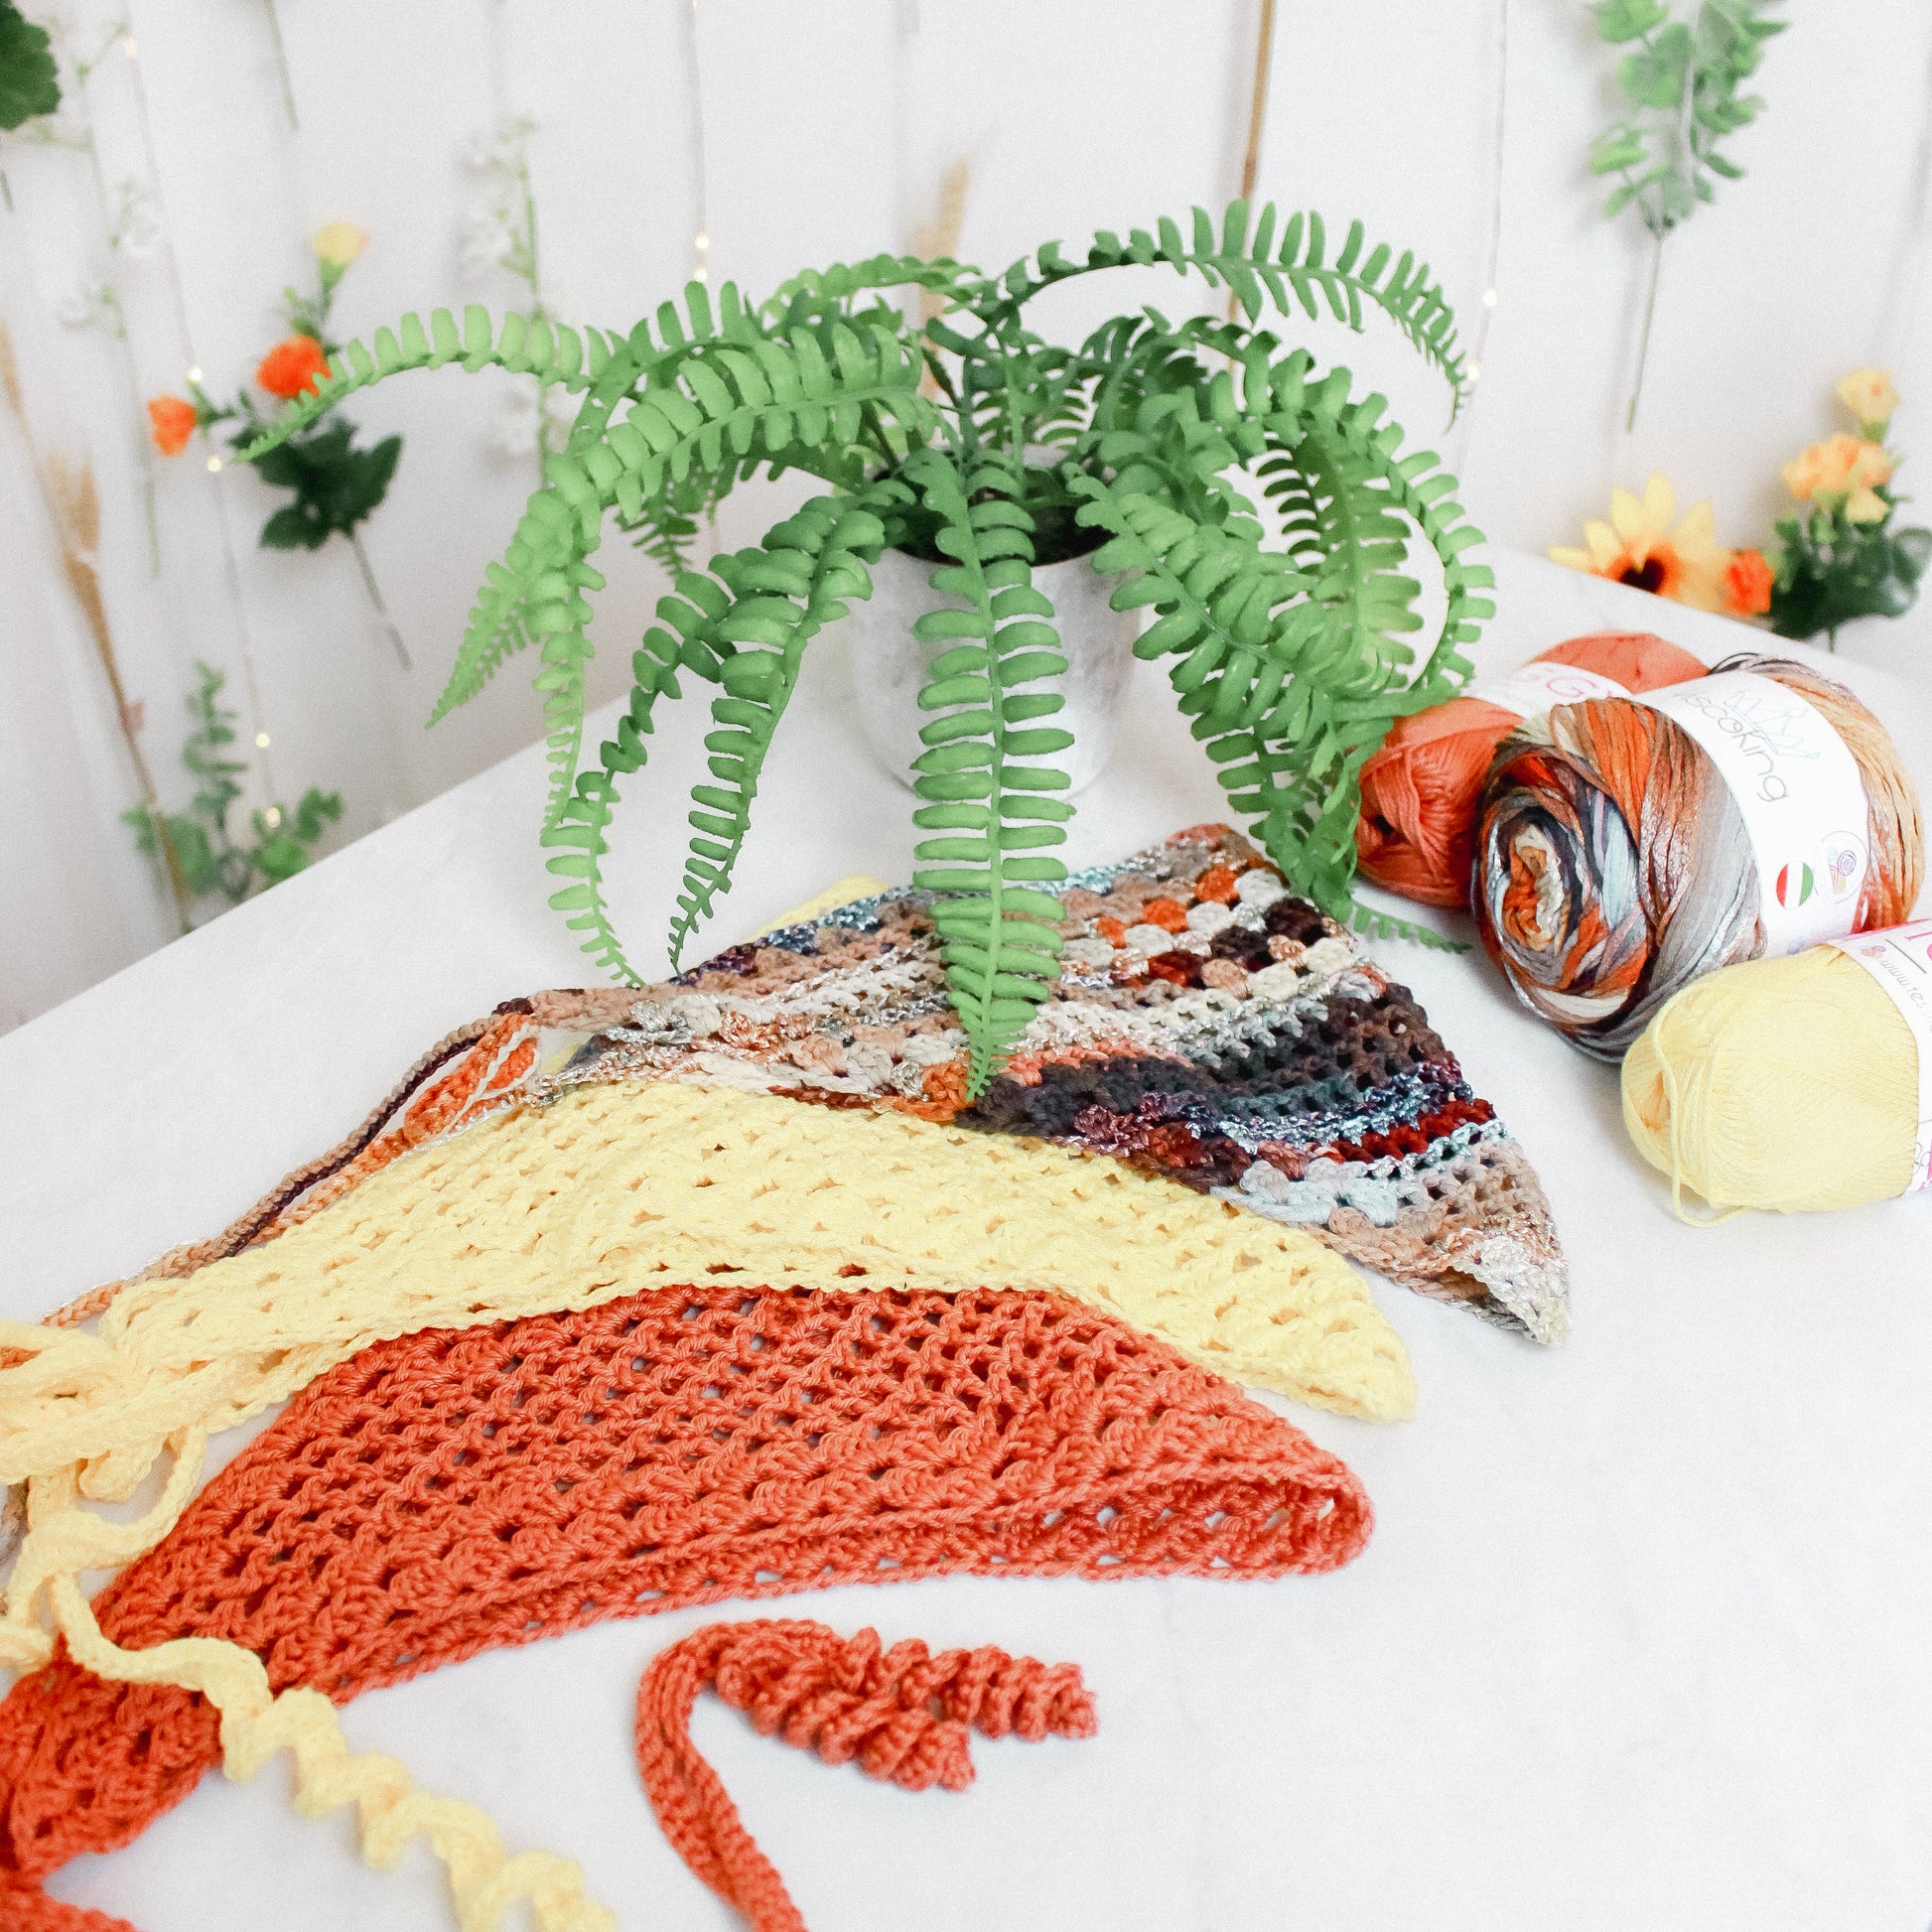 Sweet Pea Bandana ~ Crochet Kit – Poppysmicks